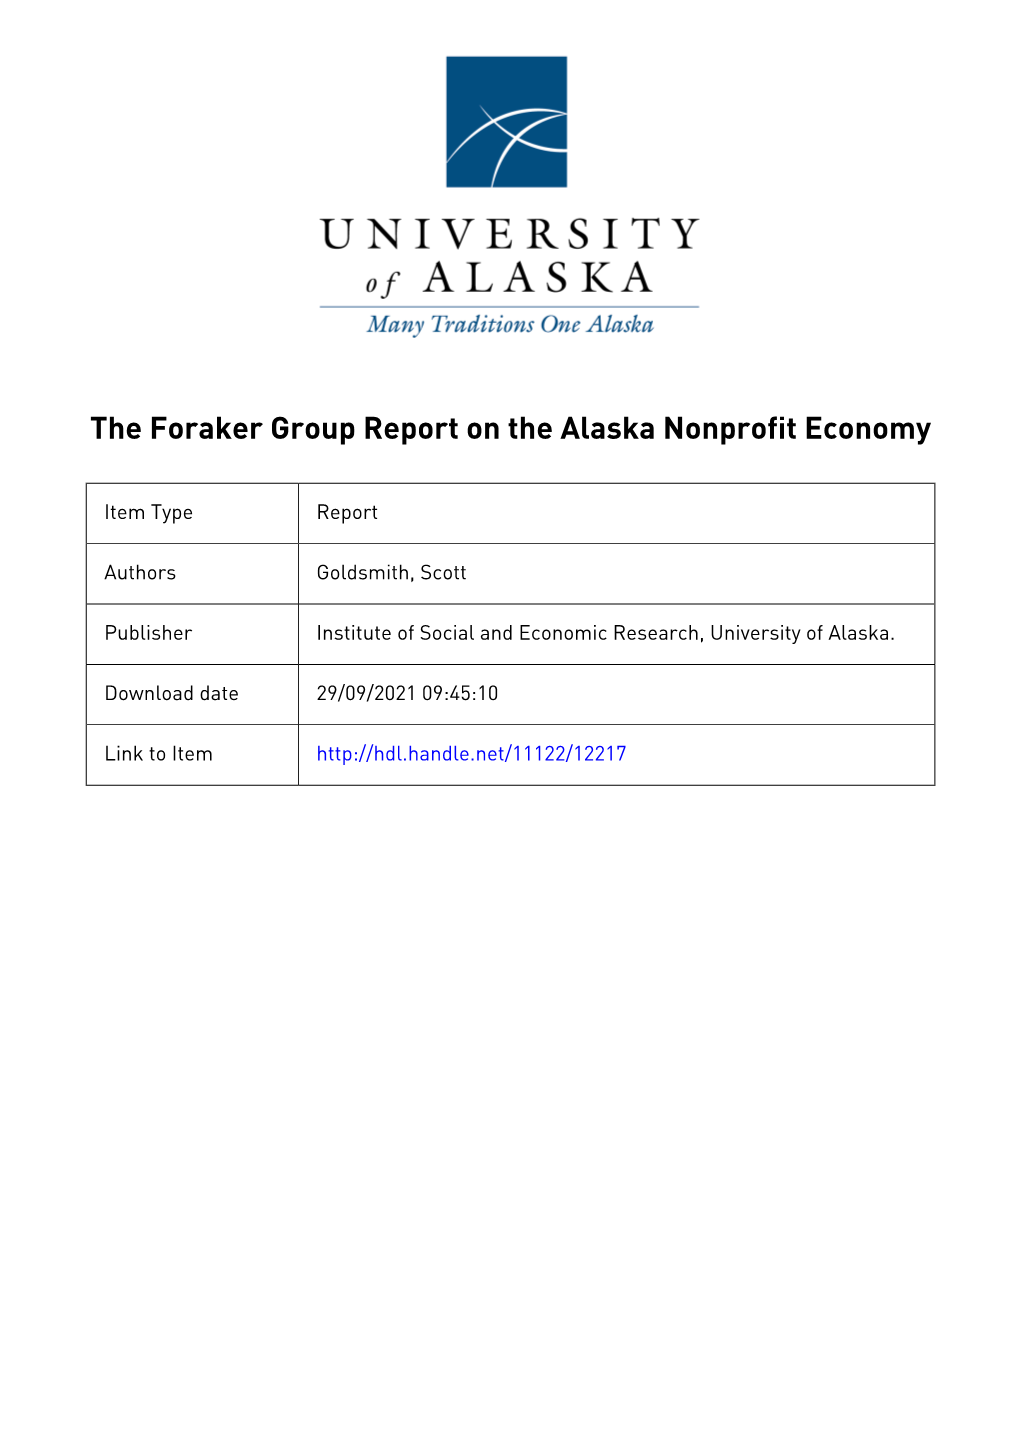 The Foraker Group Report on the Alaska Nonprofit Economy Appendix